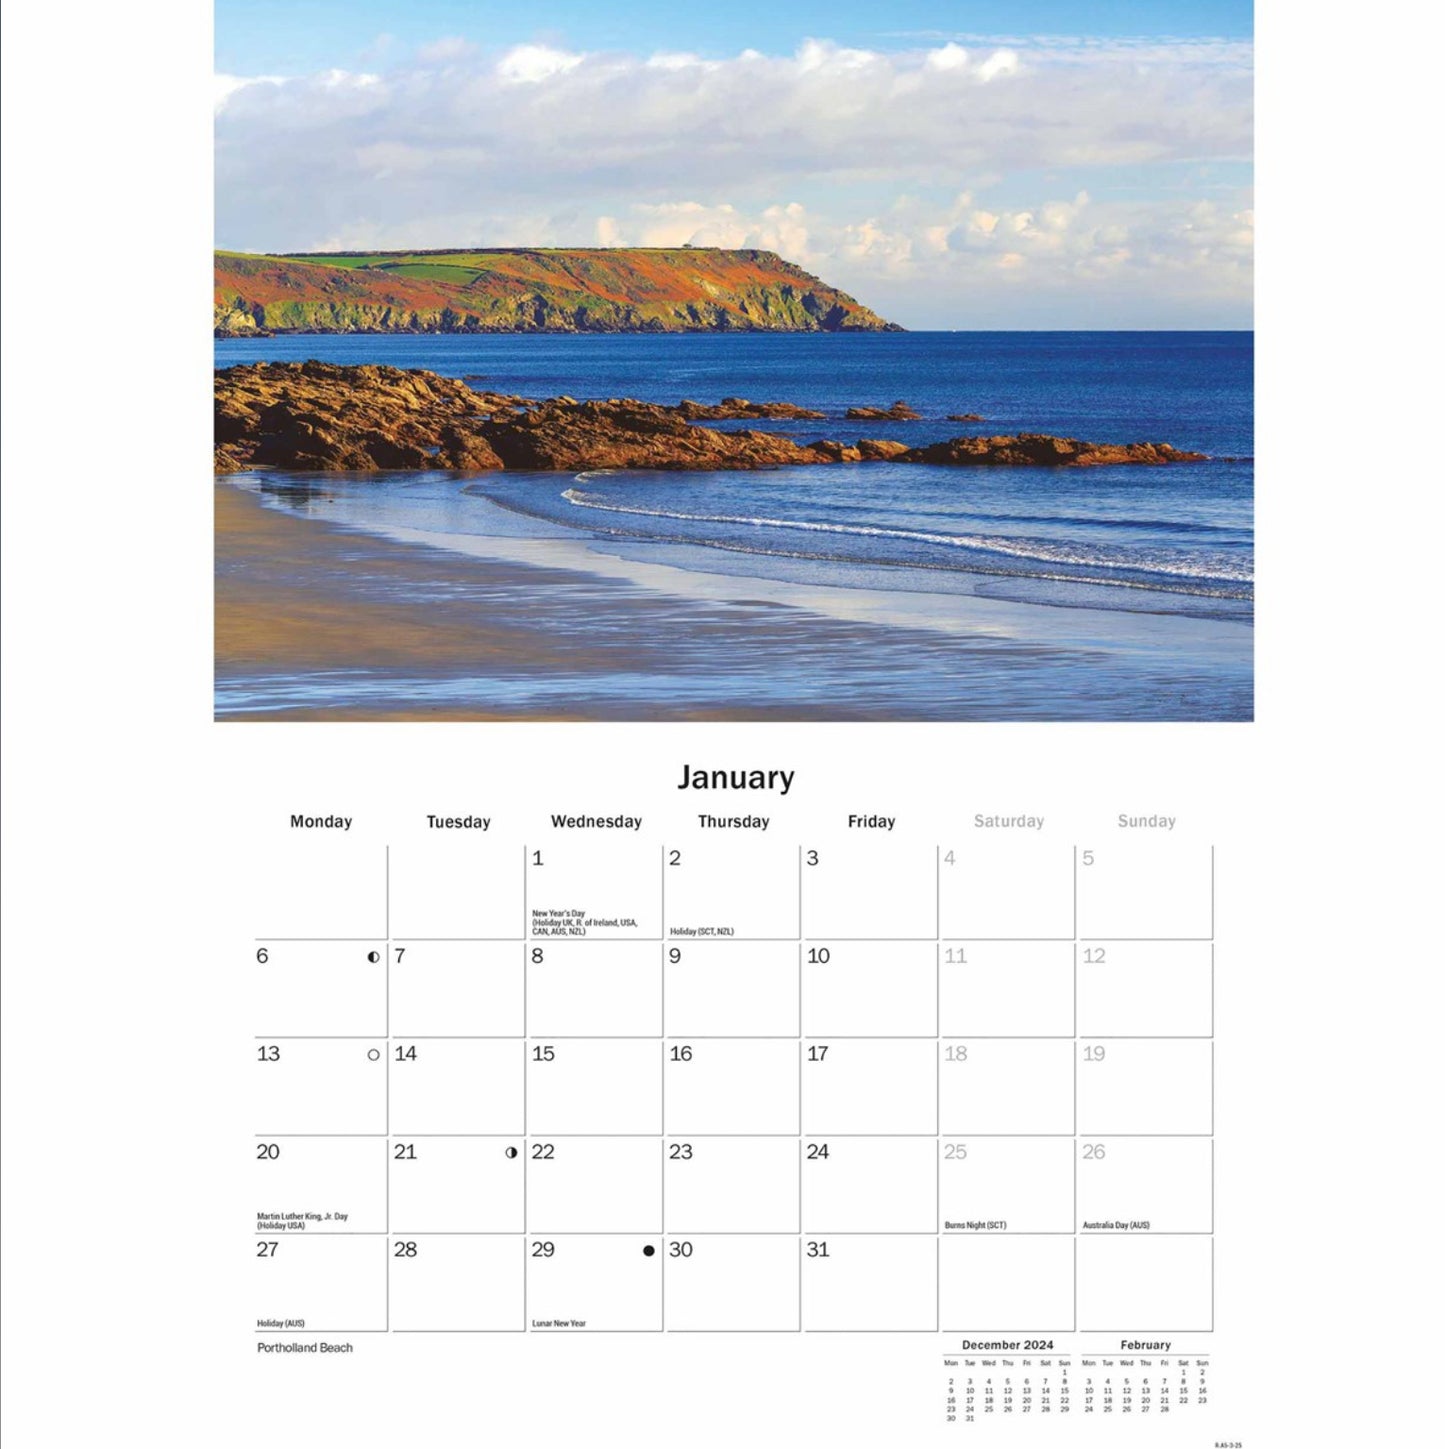 Cornish Riviera A5 Calendar 2025